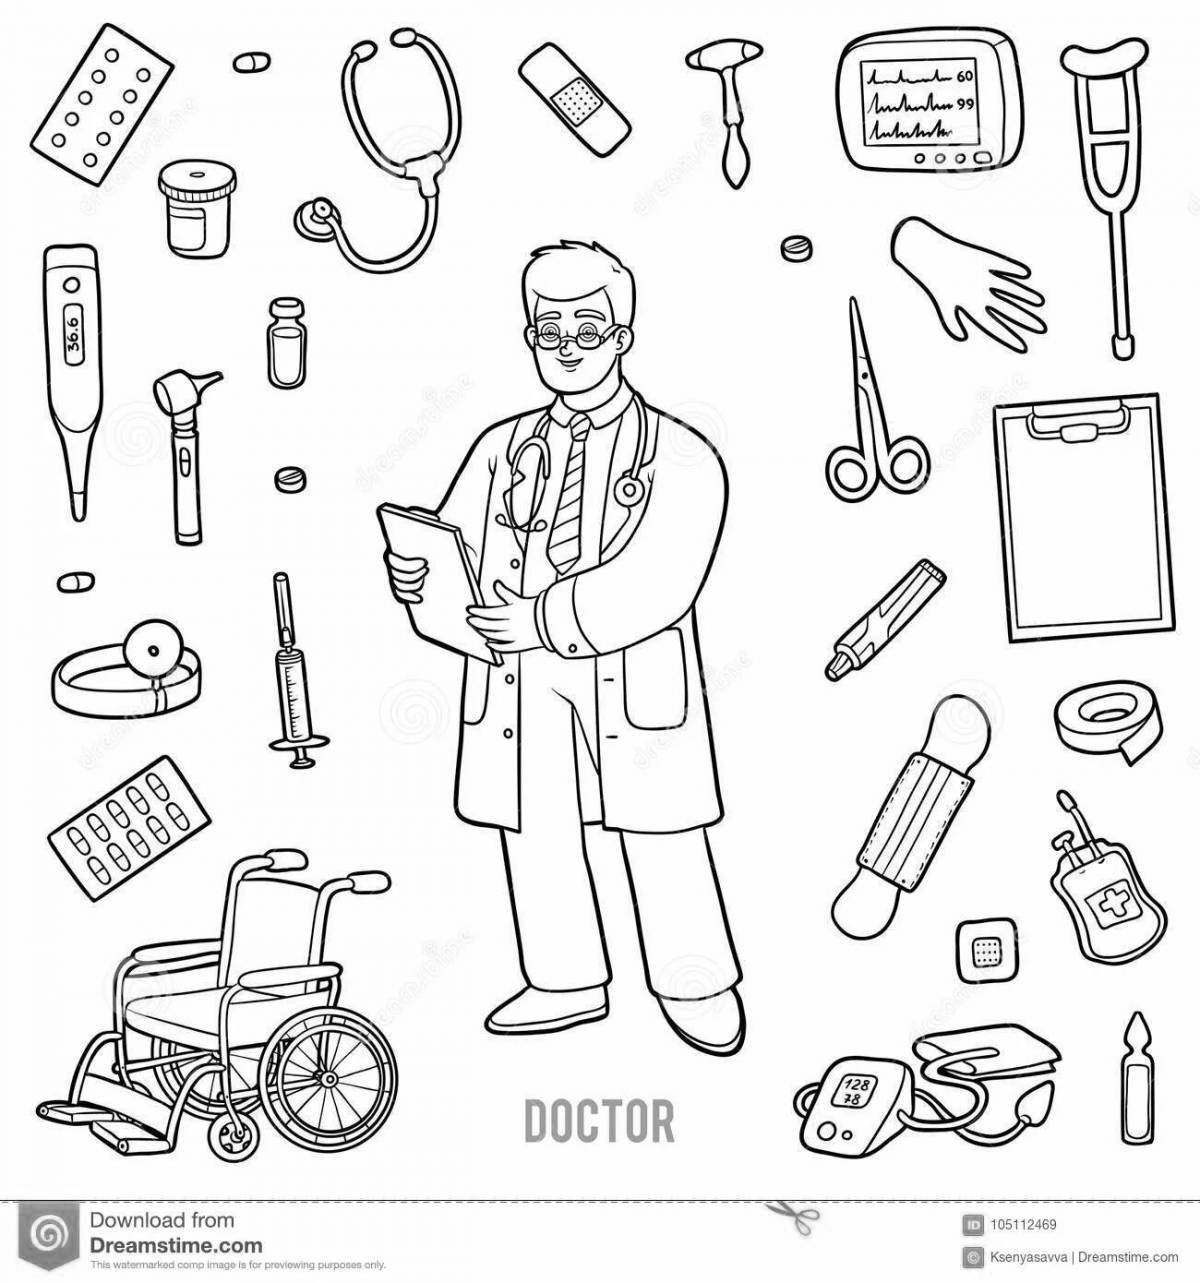 Doctor's instruments #5